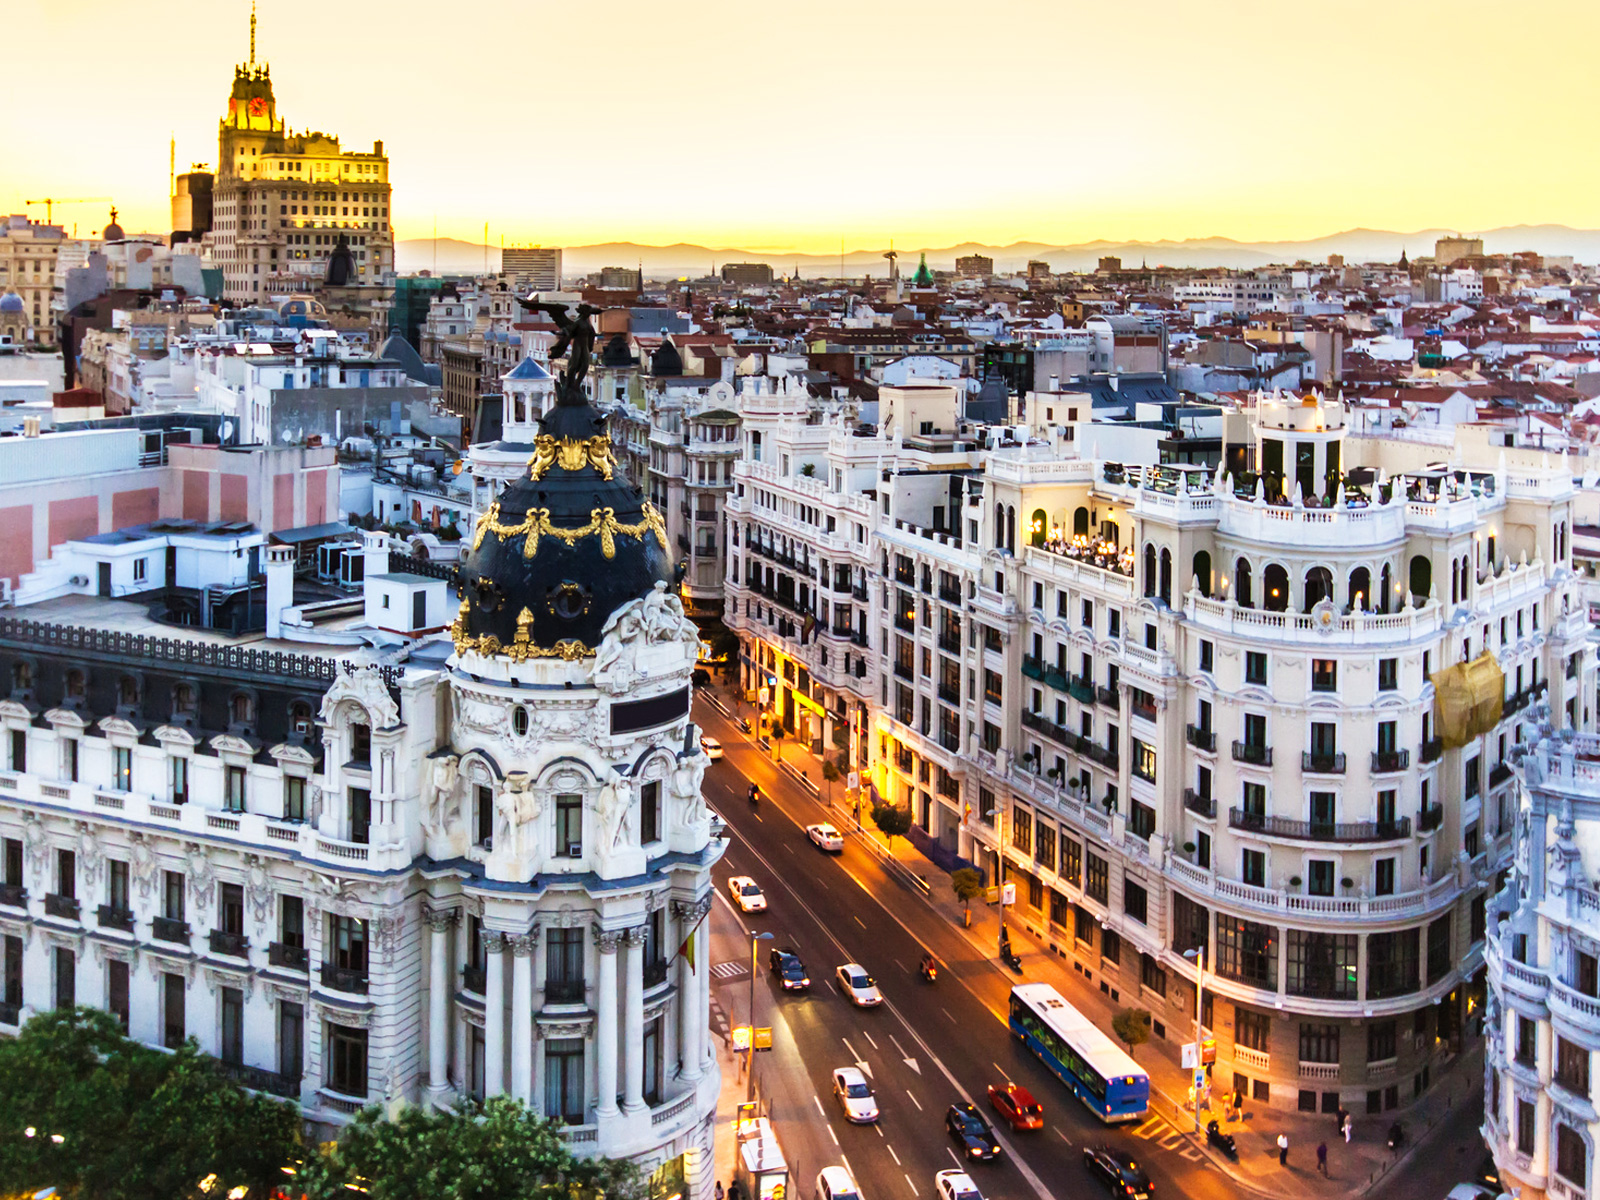 Madrid - Vincci Hoteles